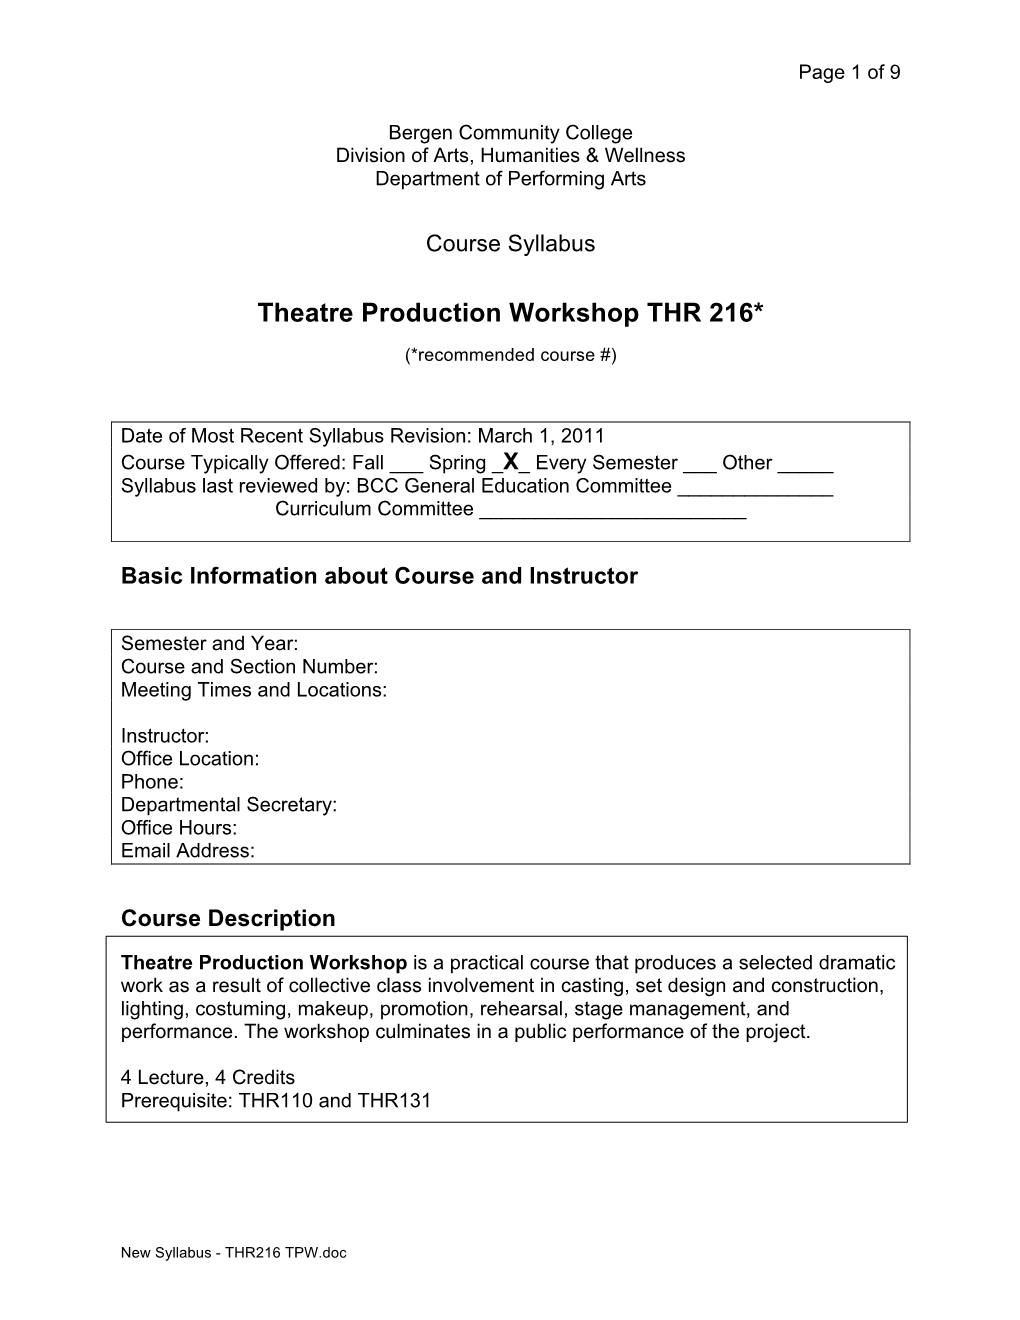 THR-216 Theatre Production Workshop